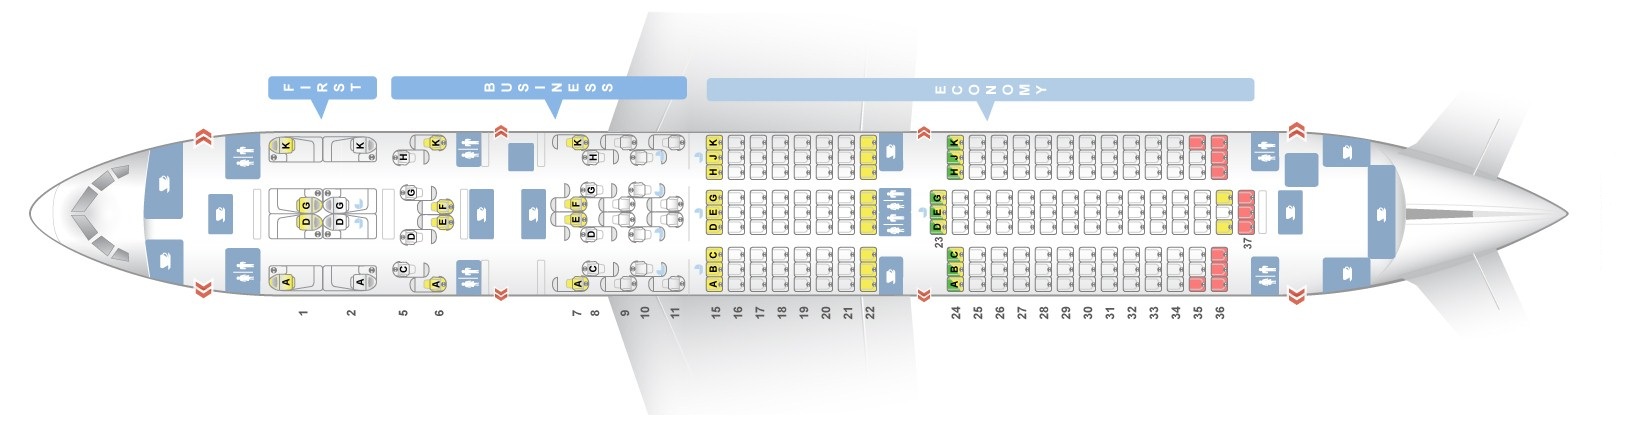 Seat Map Boeing 787 9 Dreamliner Etihad Airways Best Seats In The